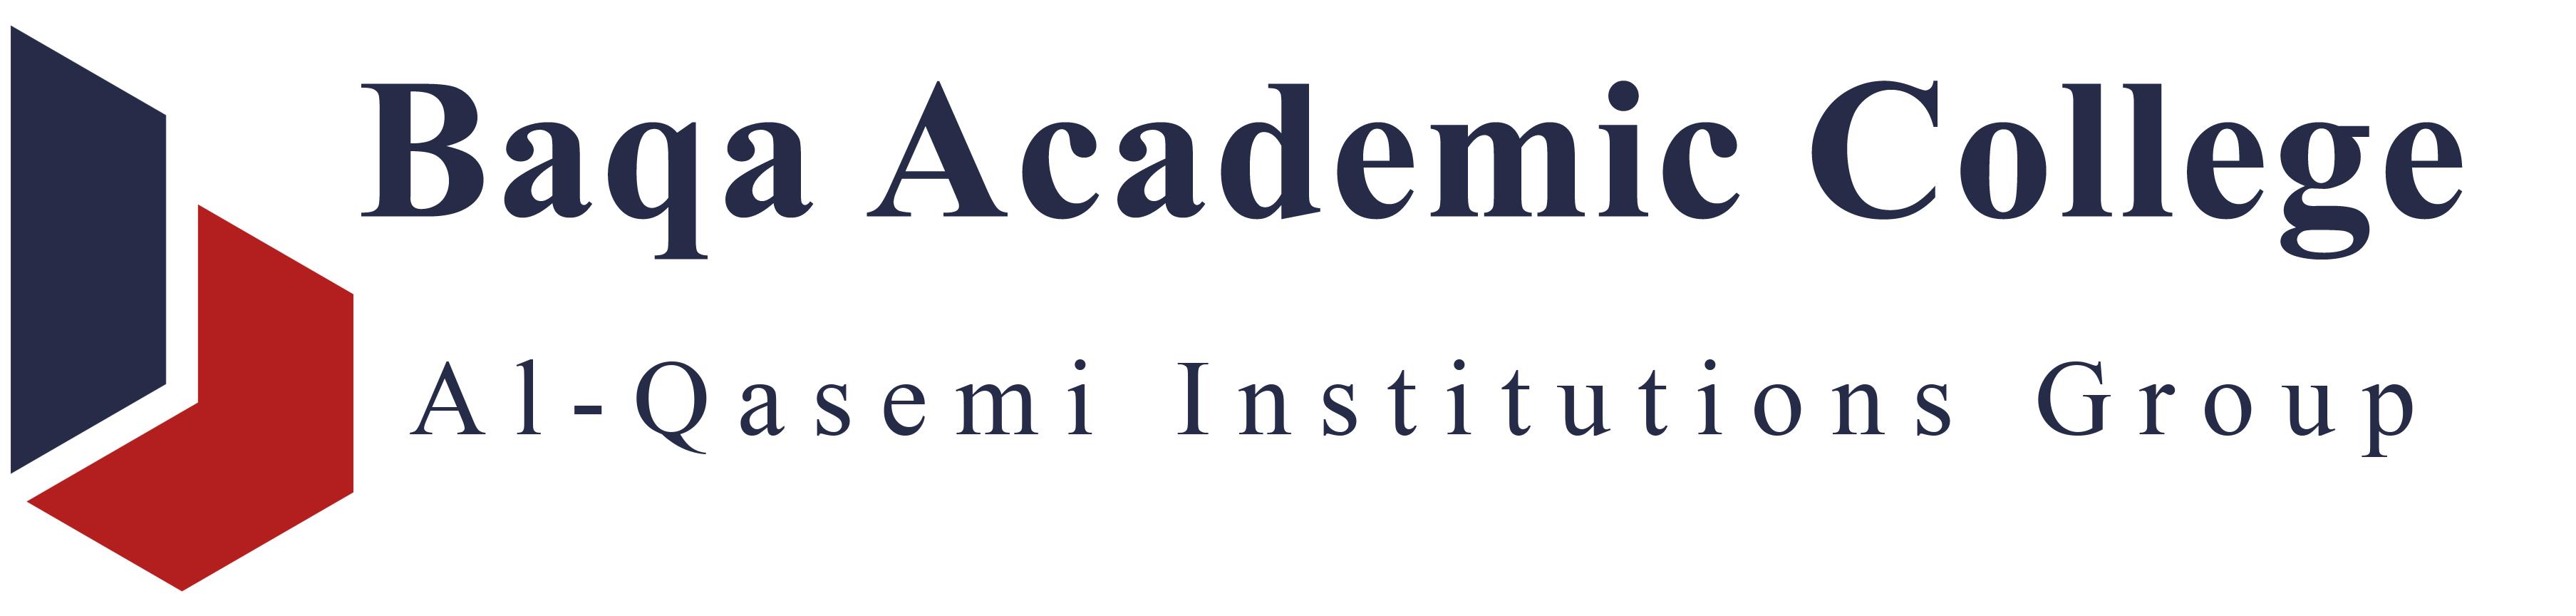 Baqa Academic College